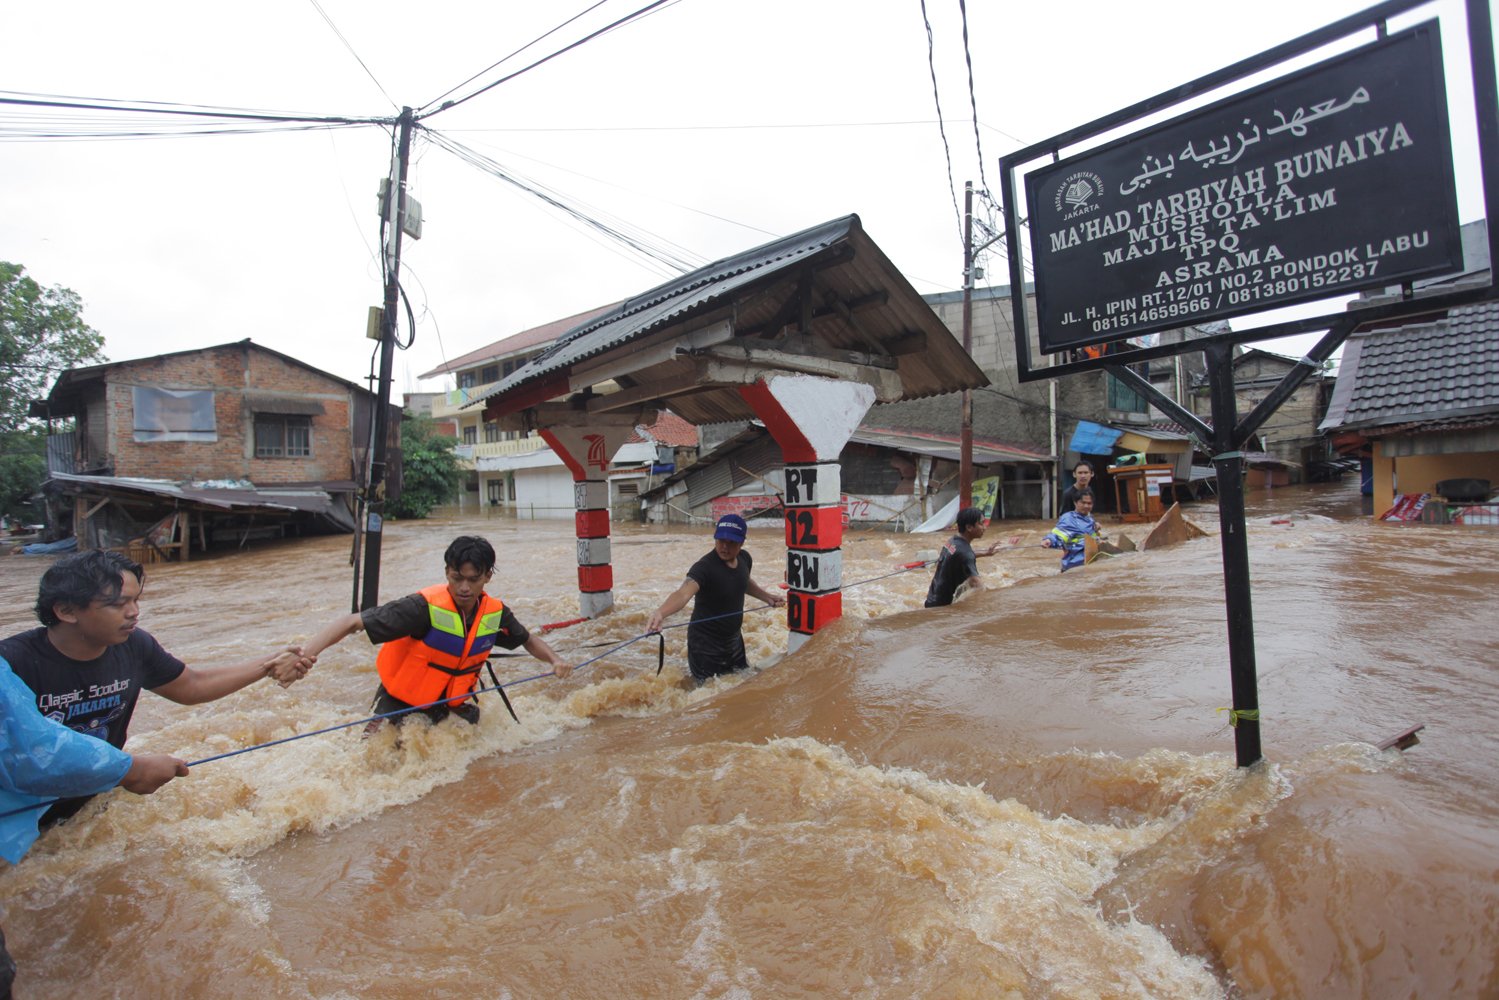 Warga melintasi banjir yang menggenangi Perumahan kawasan Jalan H. Ipin, Pondok Labu, Jakarta, Rabu (1/1/2020). Tingginya intensitas hujan sejak kemarin hingga pagi ini membuat jalan H.Ipin ke Pondok Labu ter putus. 